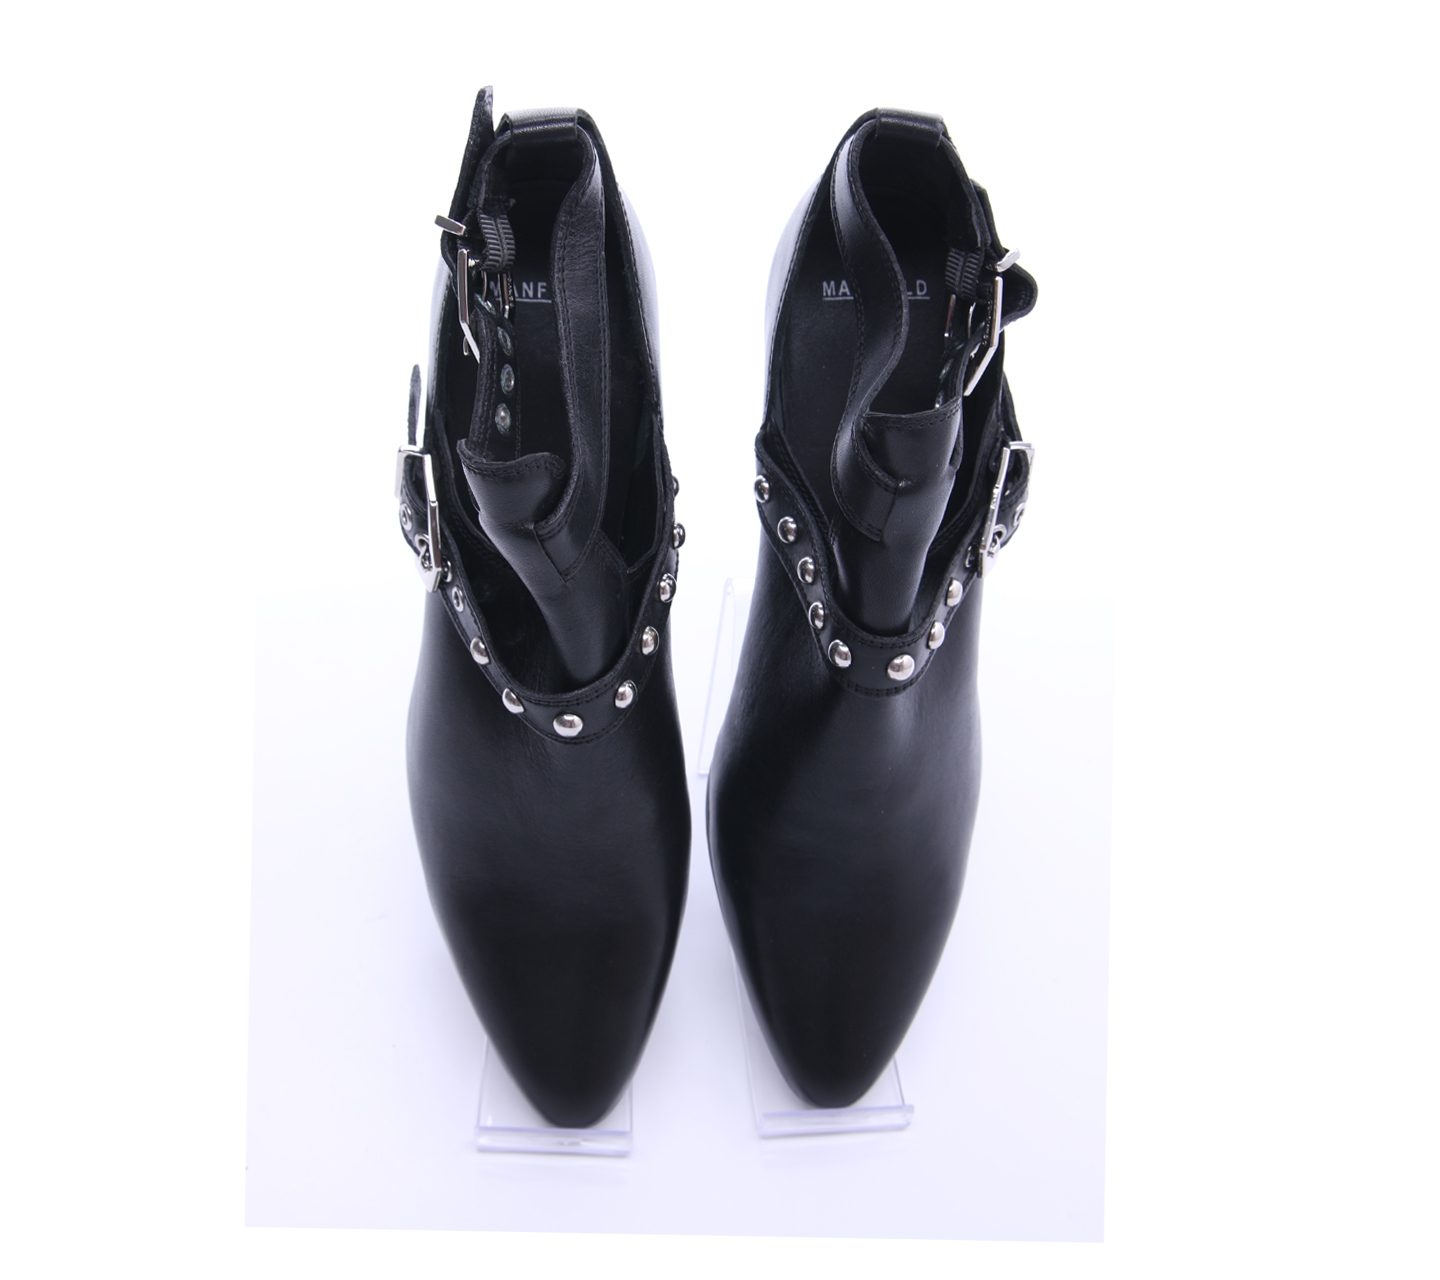 Manfield Black Boots Heels